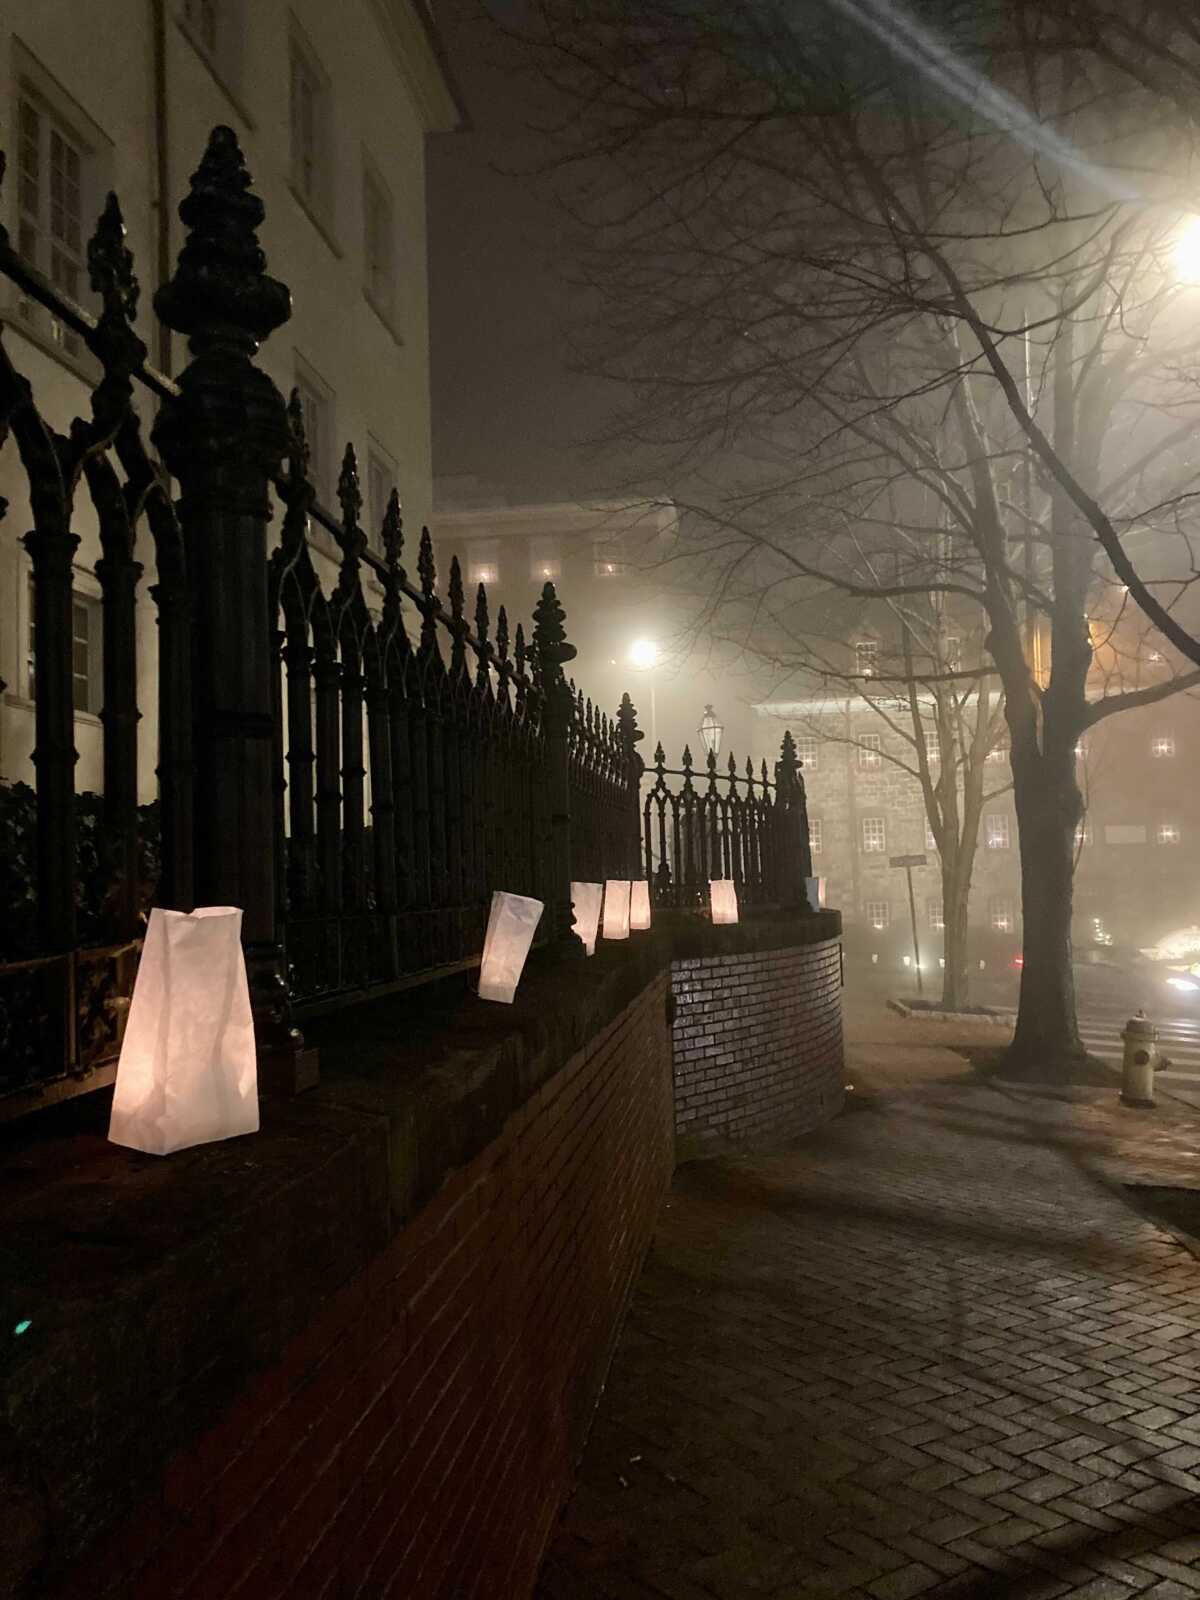 Luminaria glow during a foggy night on Main Street in Bethlehem, Pa.